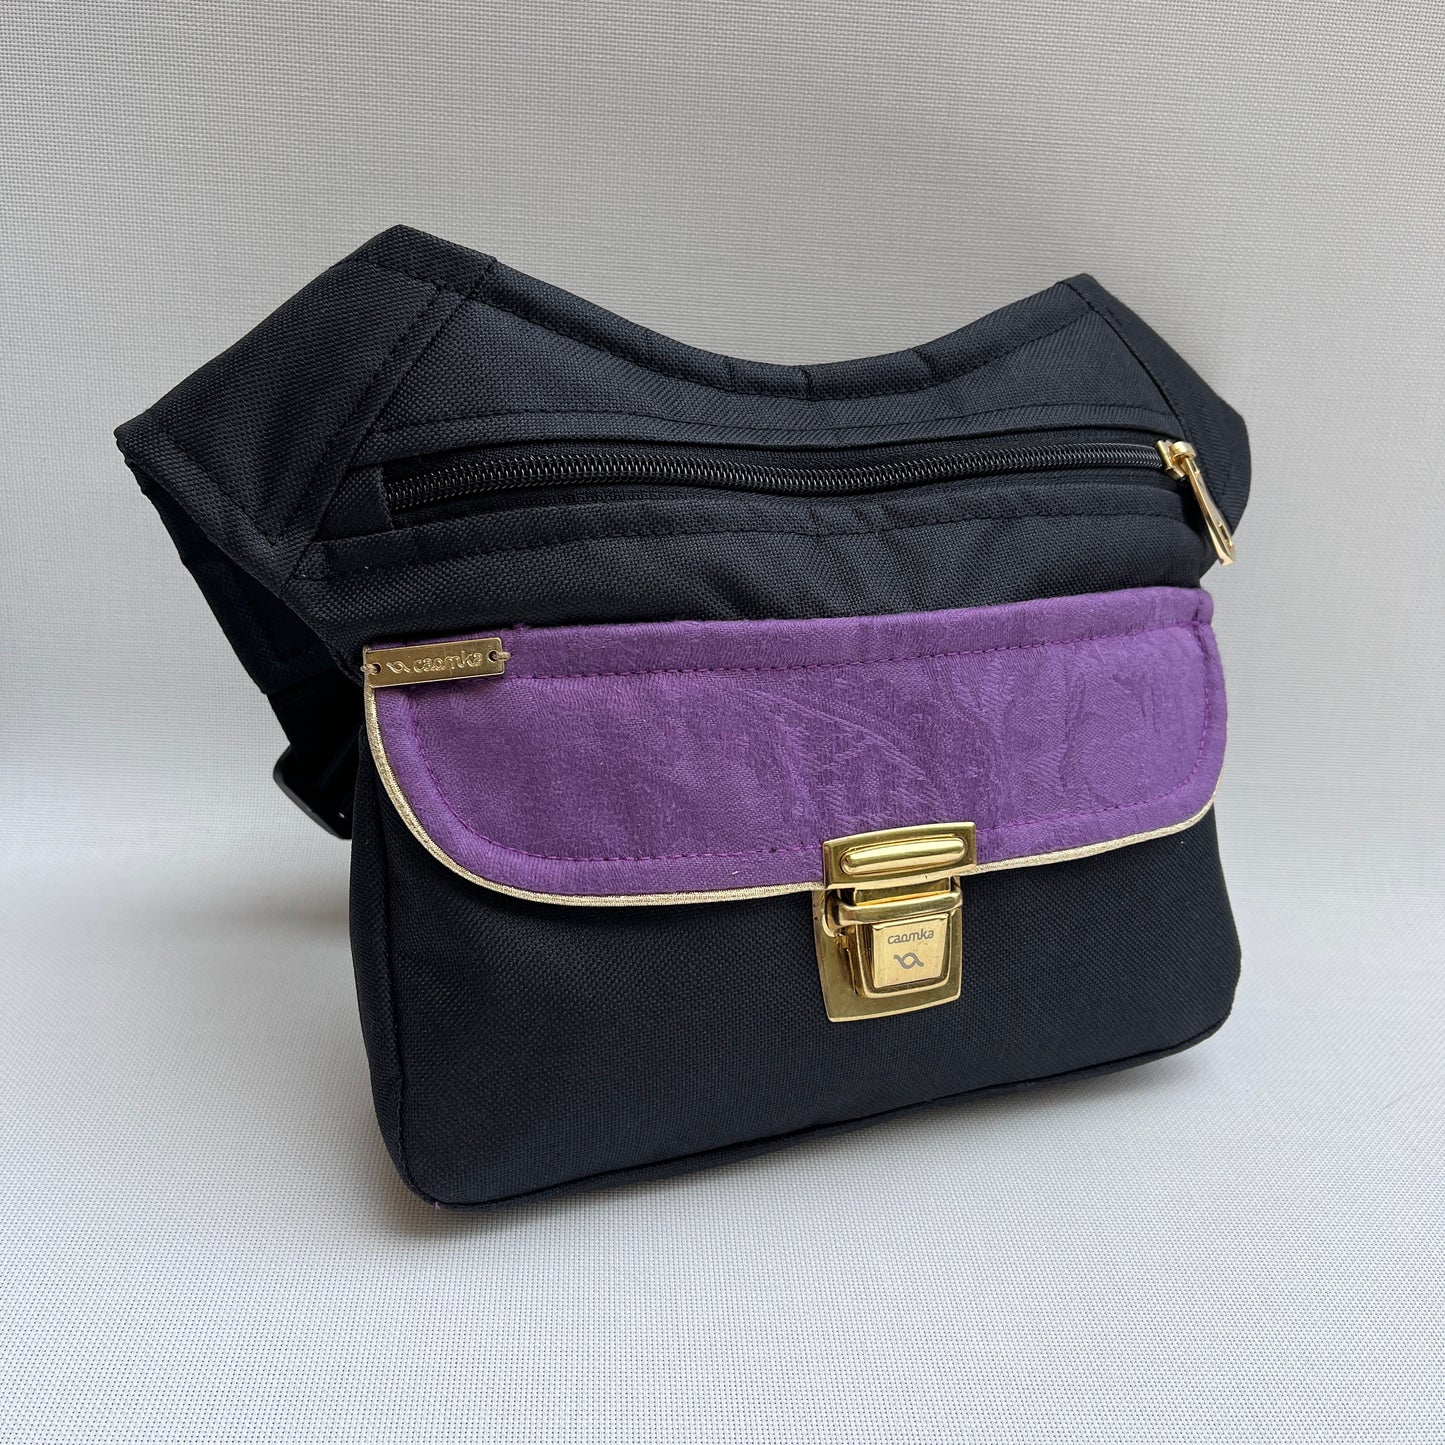 Special Black & Purple · Impermeable · Pieza Única Núm. 11704